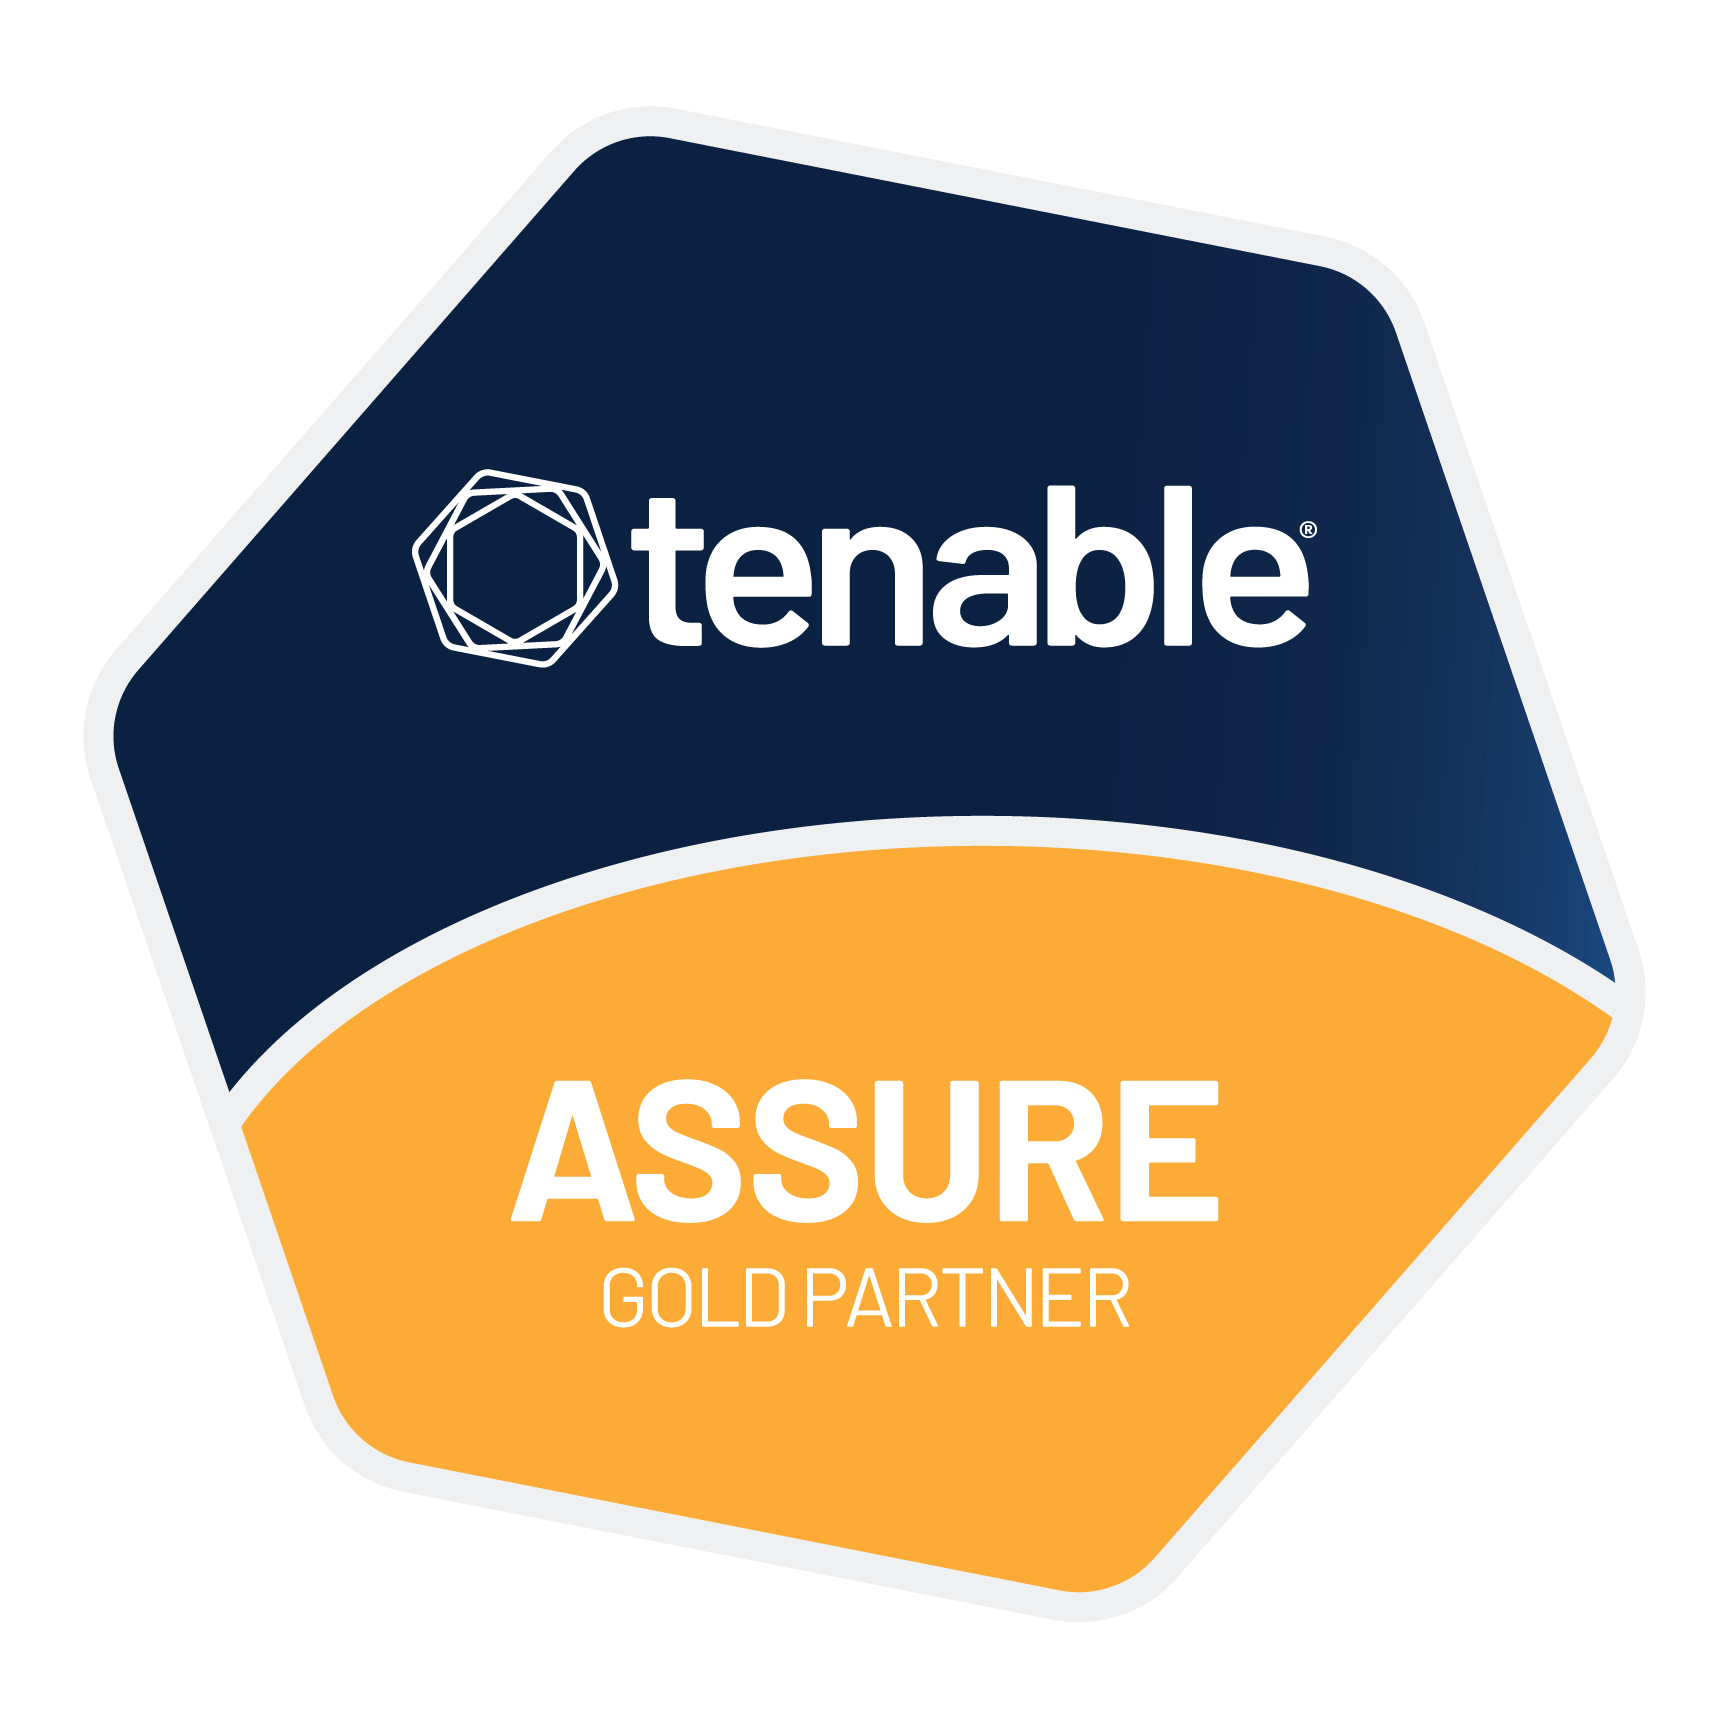 Tenable the Assure gold partner badges